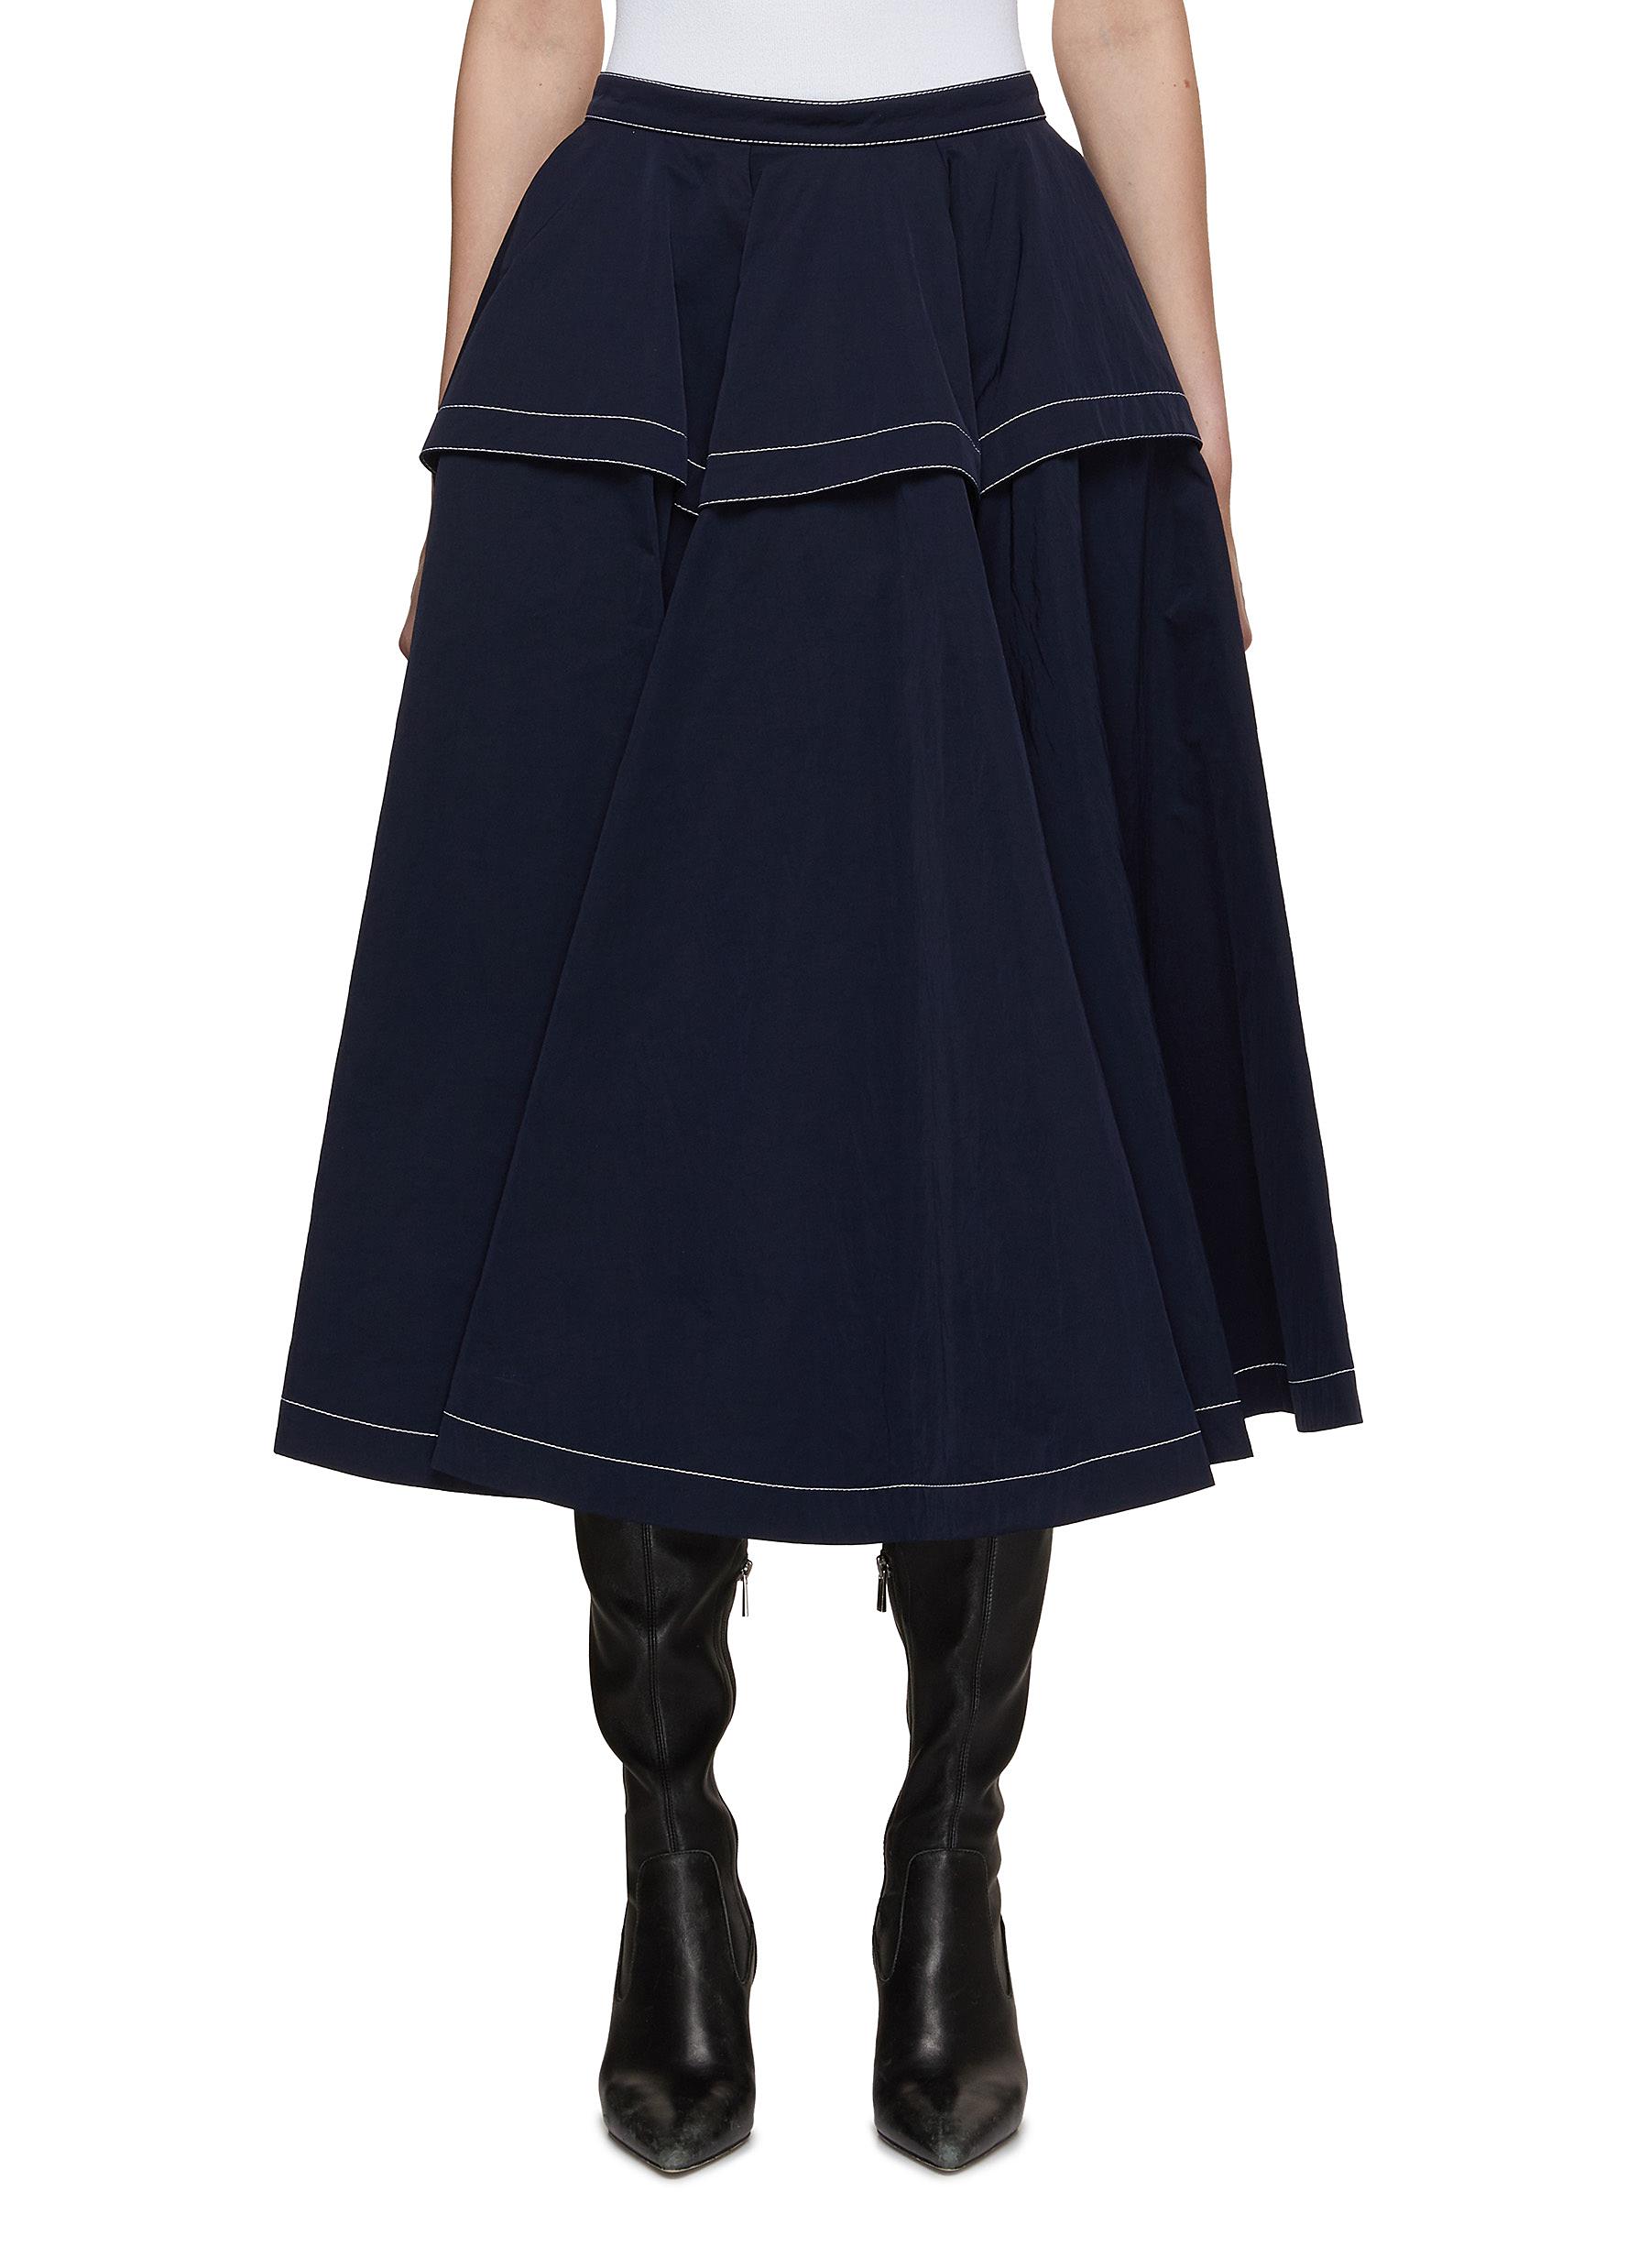 Contrast Stitch Skirt